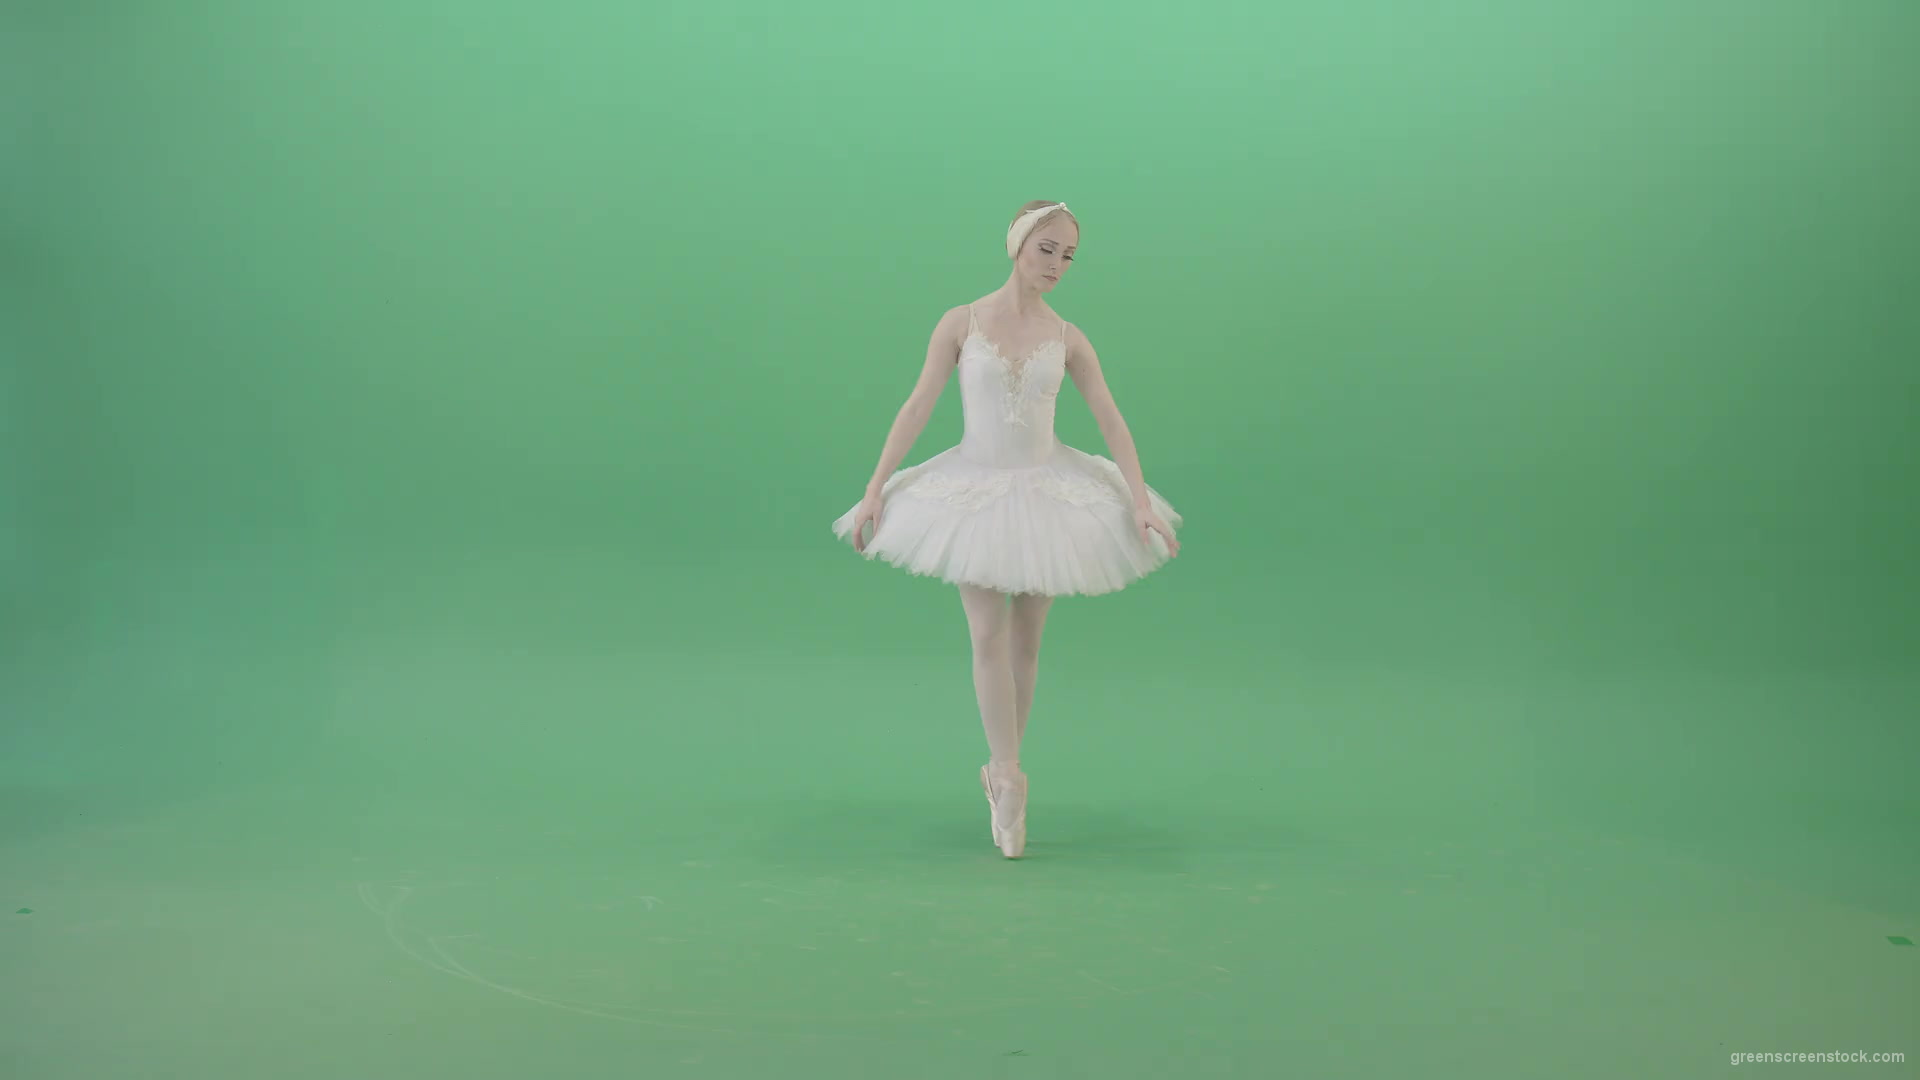 Luxury-Vienna-Opera-Ballet-Girl-has-a-PSY-Flight-on-Green-Screen-4K-Video-Footage-1920_001 Green Screen Stock